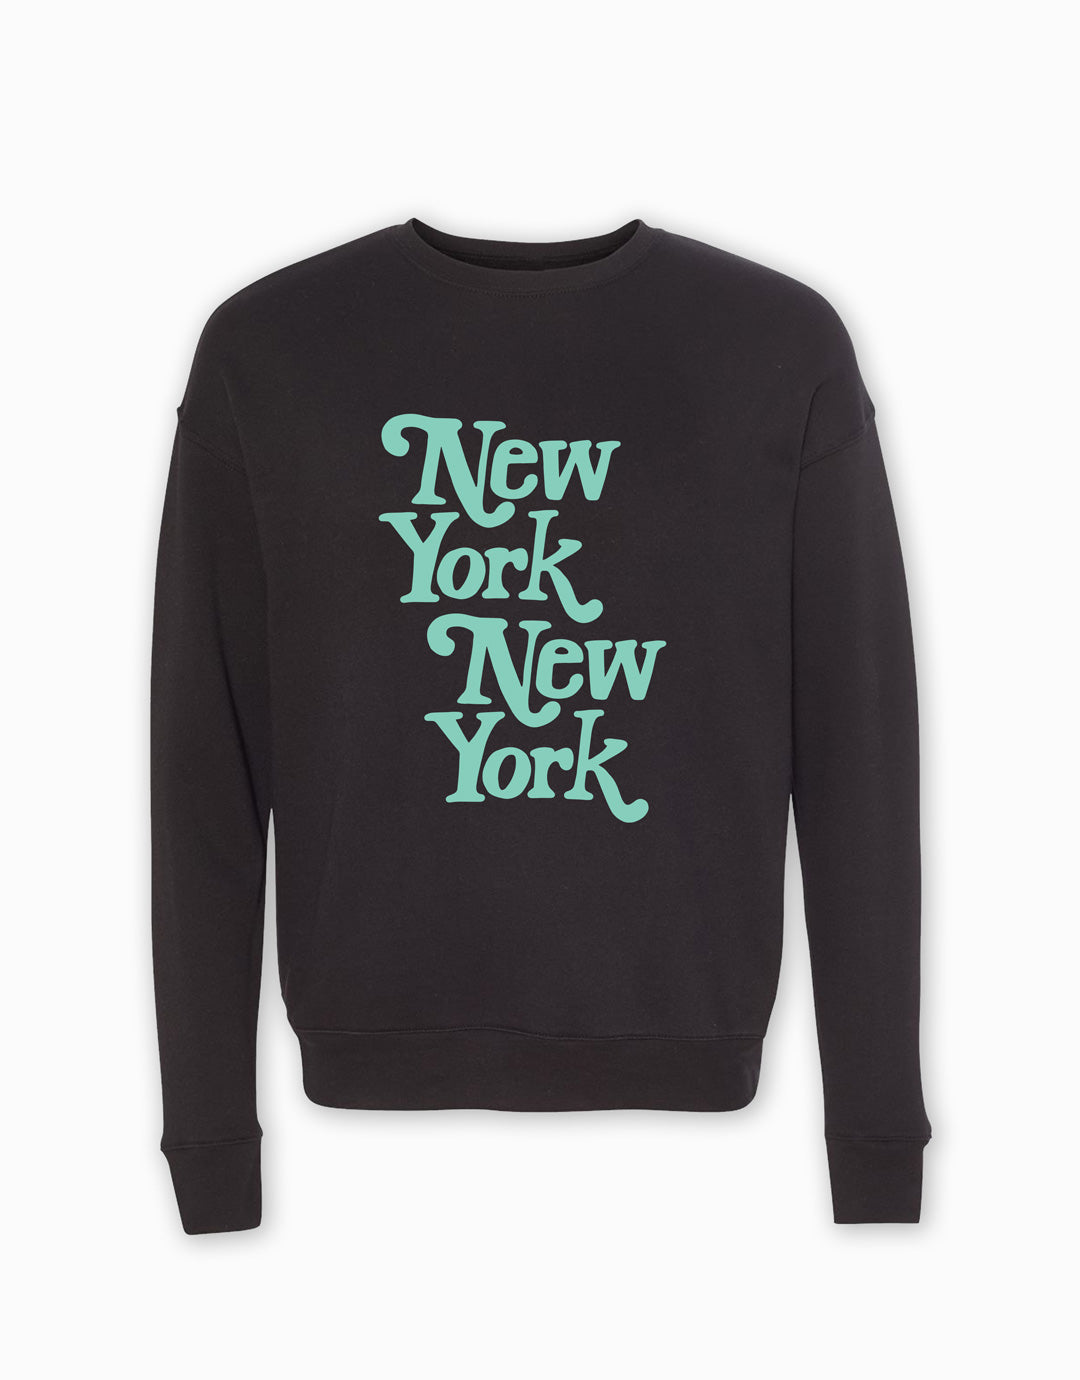 New York, New York Sweatshirt - Black/Mint